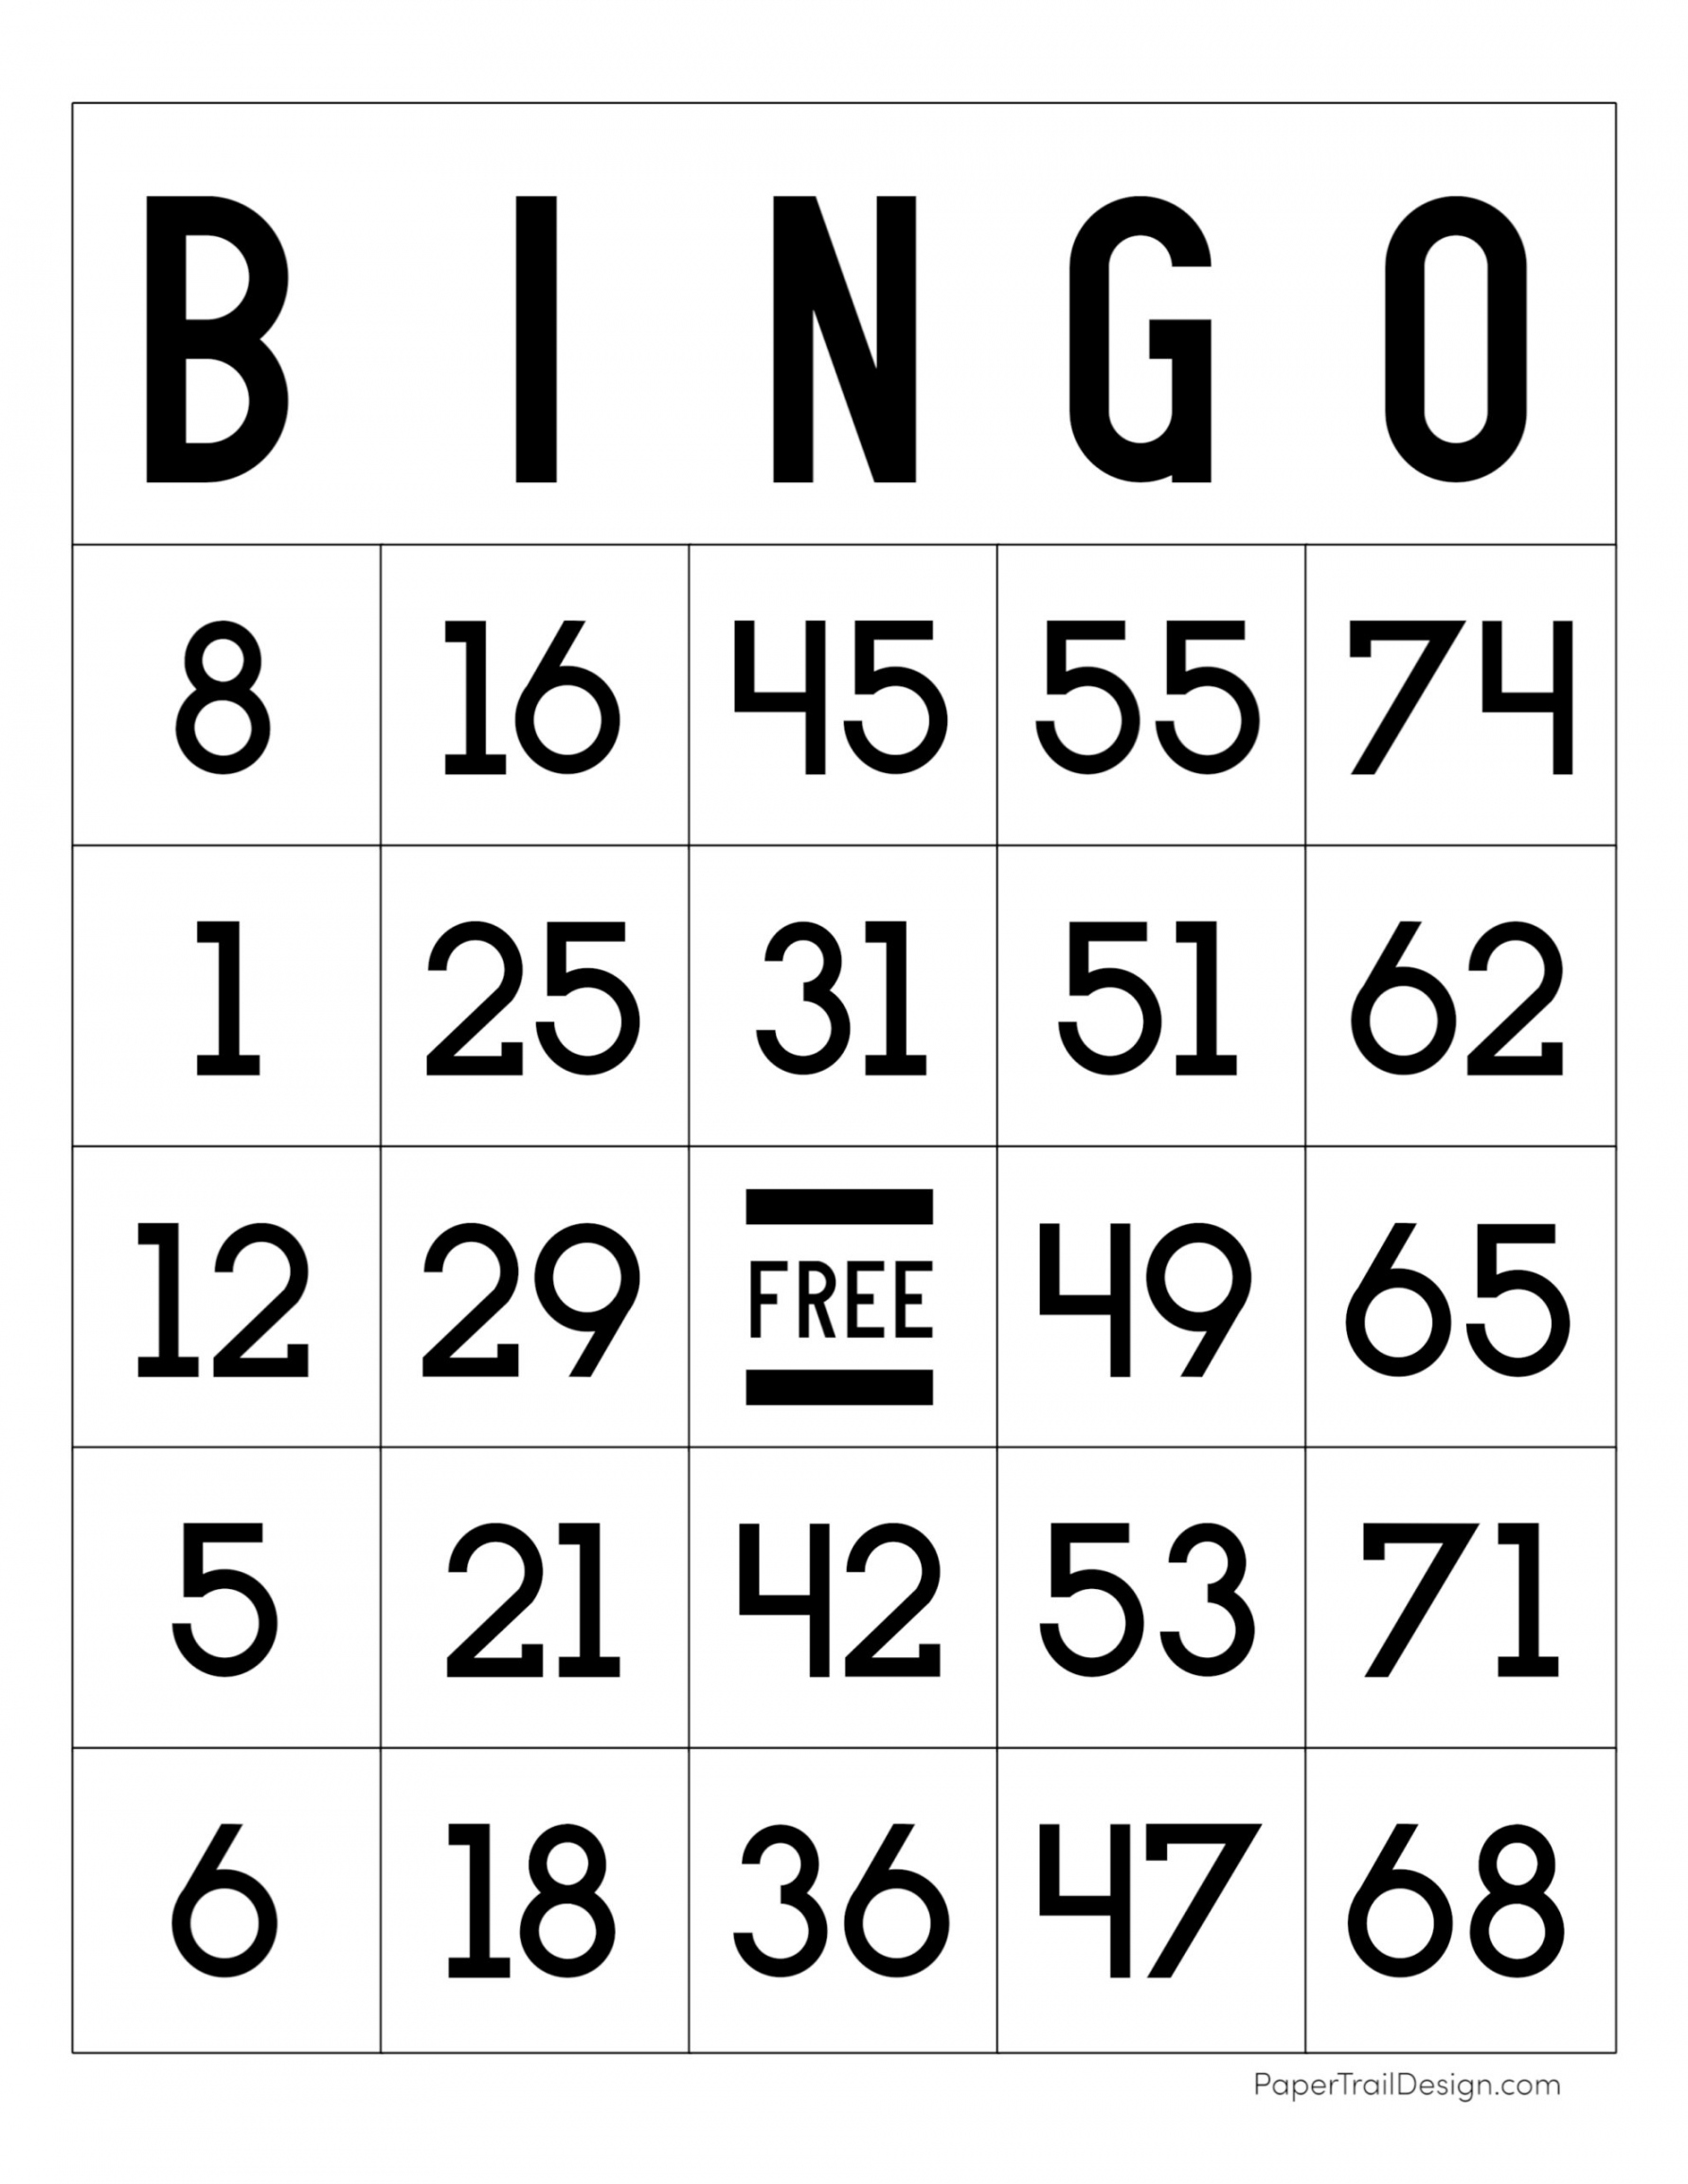 Bingo Card Generator Free Printable - Printable - Free Printable Bingo Cards - Paper Trail Design